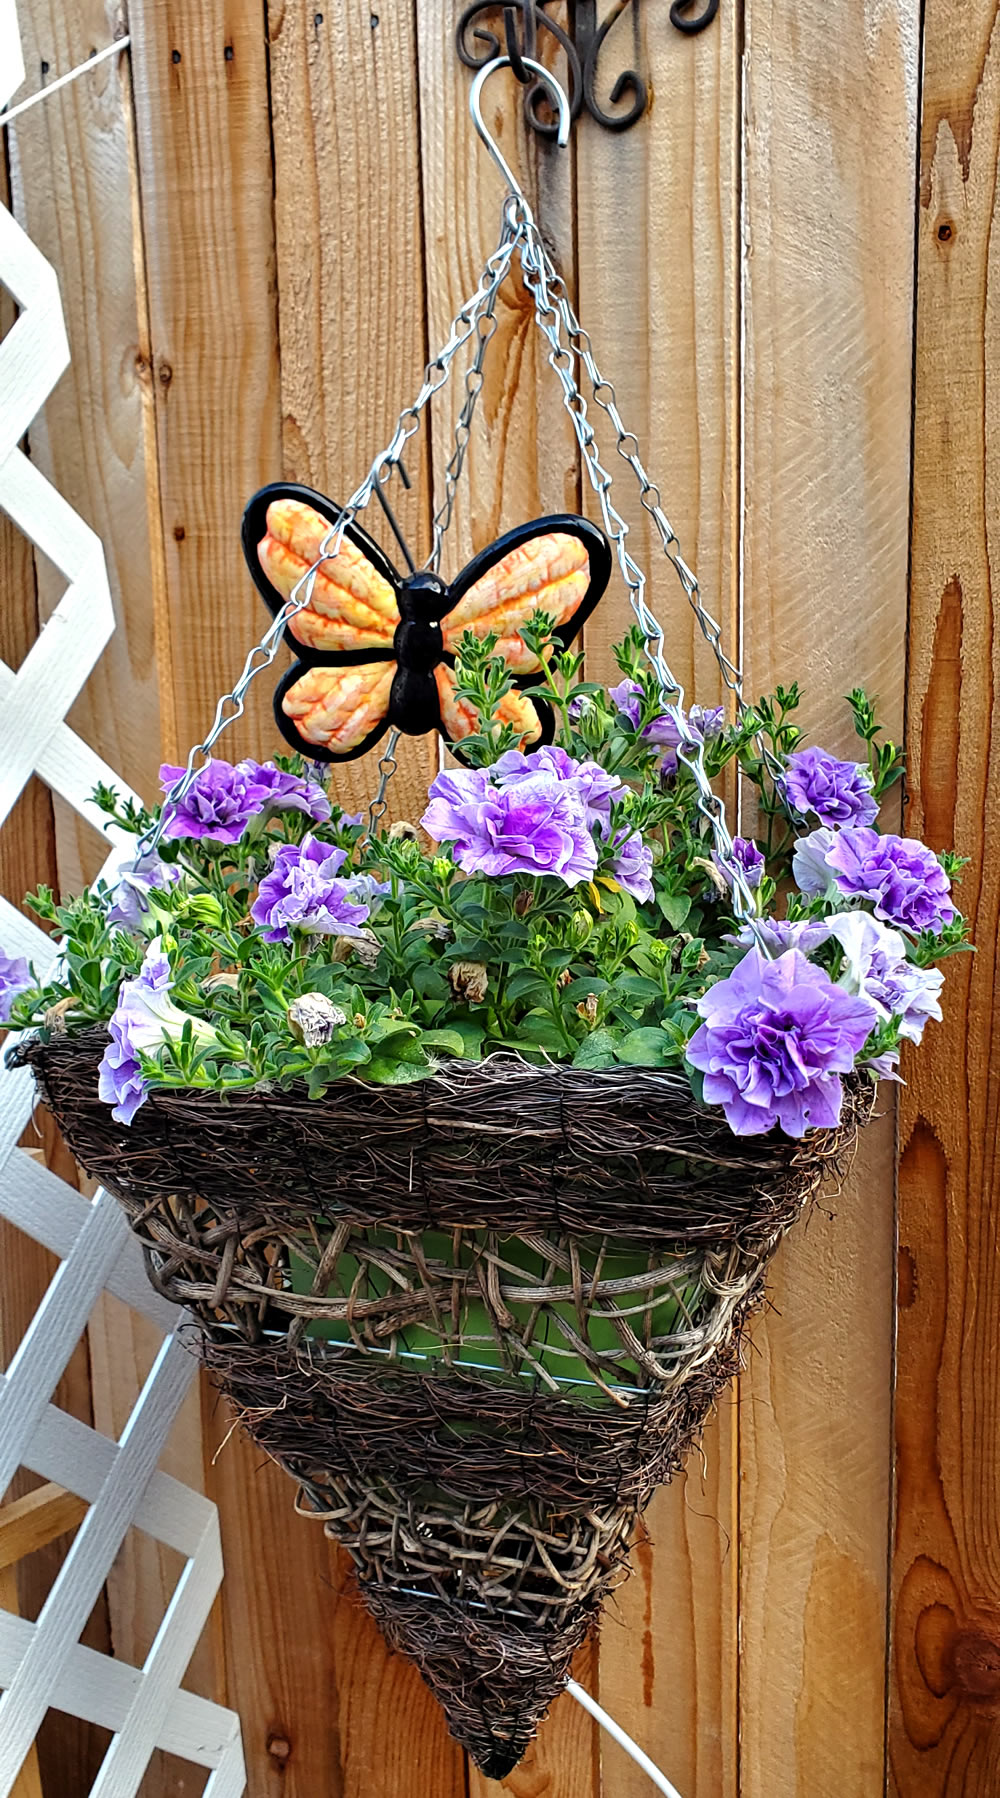 Aunt Patti's hanging basket creation